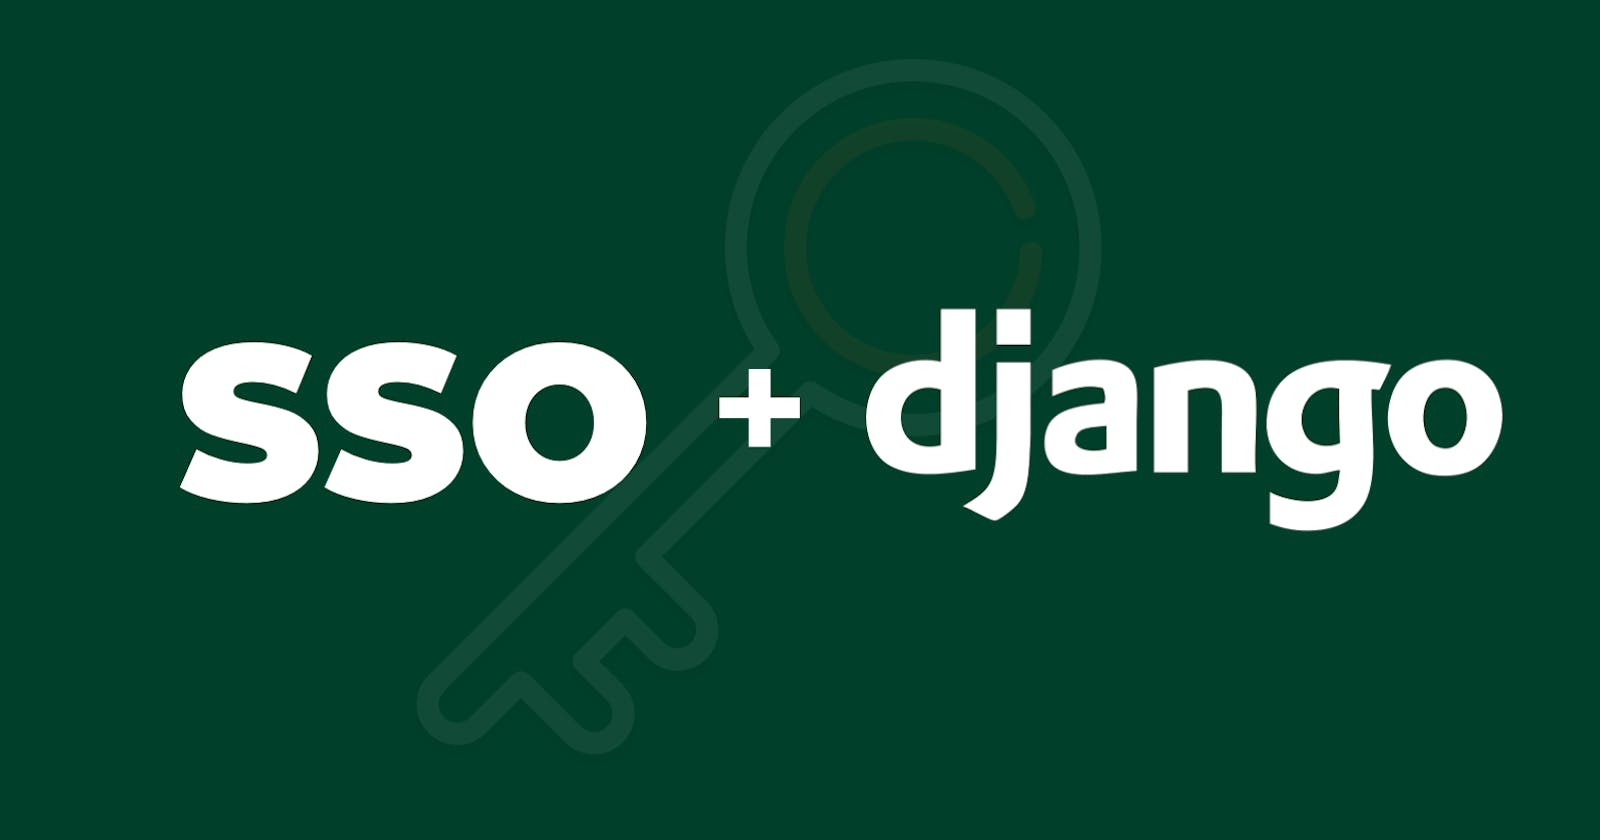 Adding single sign-on to your Django web application using OIDC